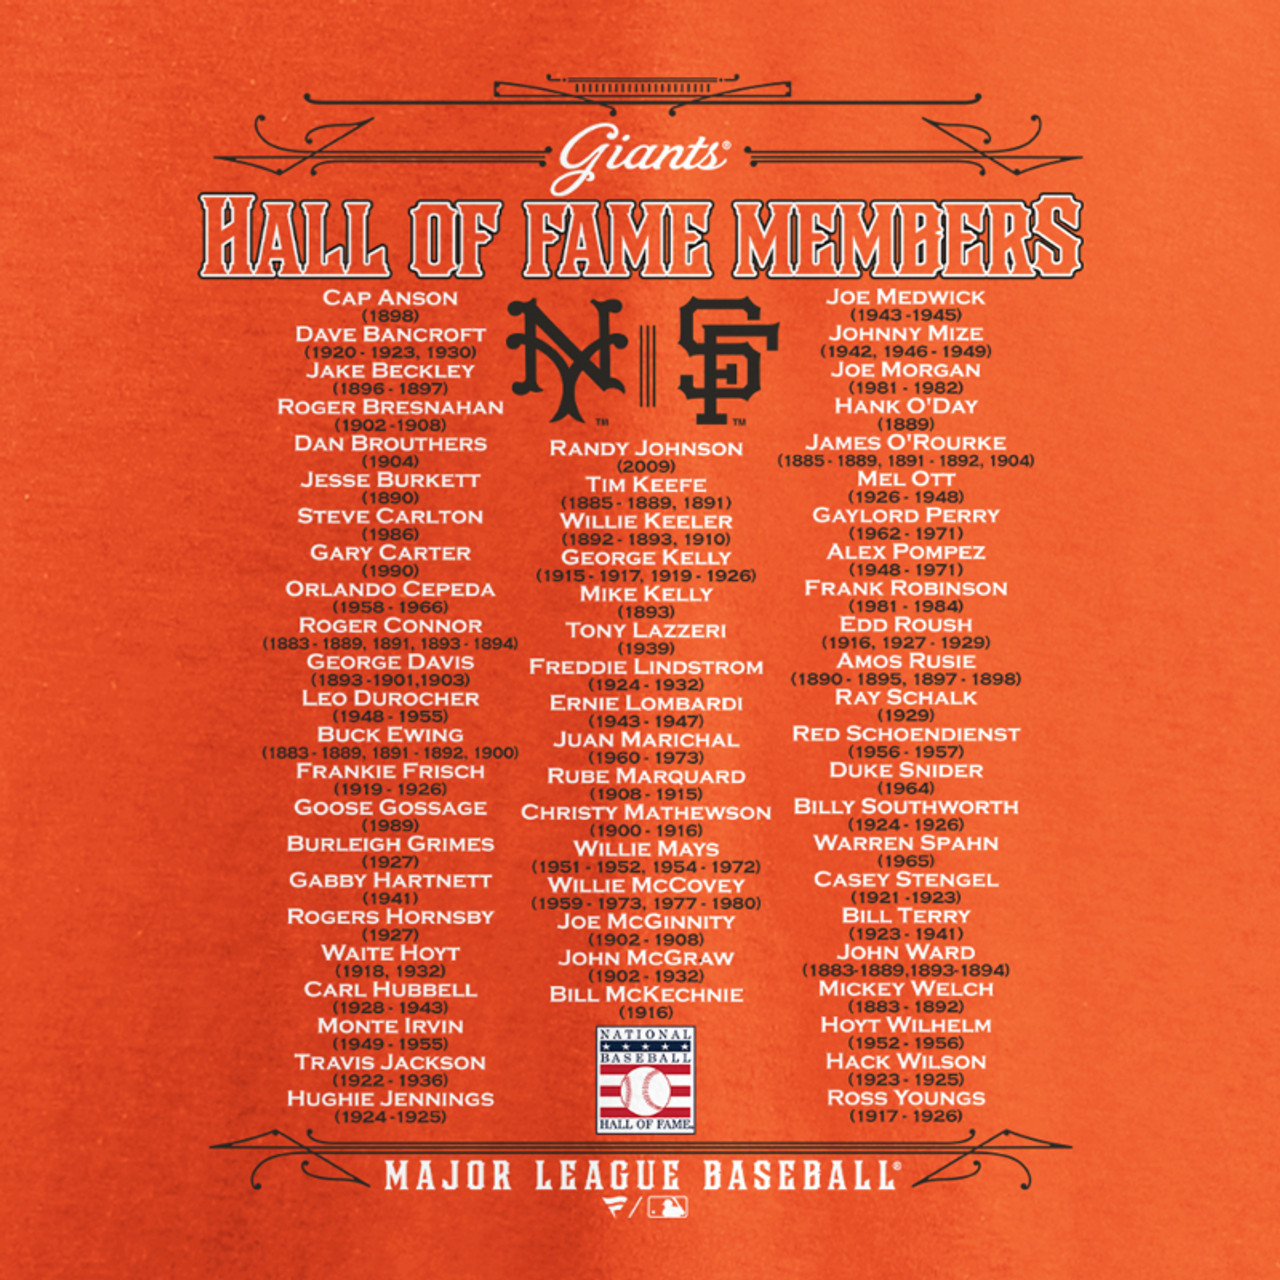 Official Juan Marichal San Francisco Giants Jersey, Juan Marichal Shirts,  Giants Apparel, Juan Marichal Gear